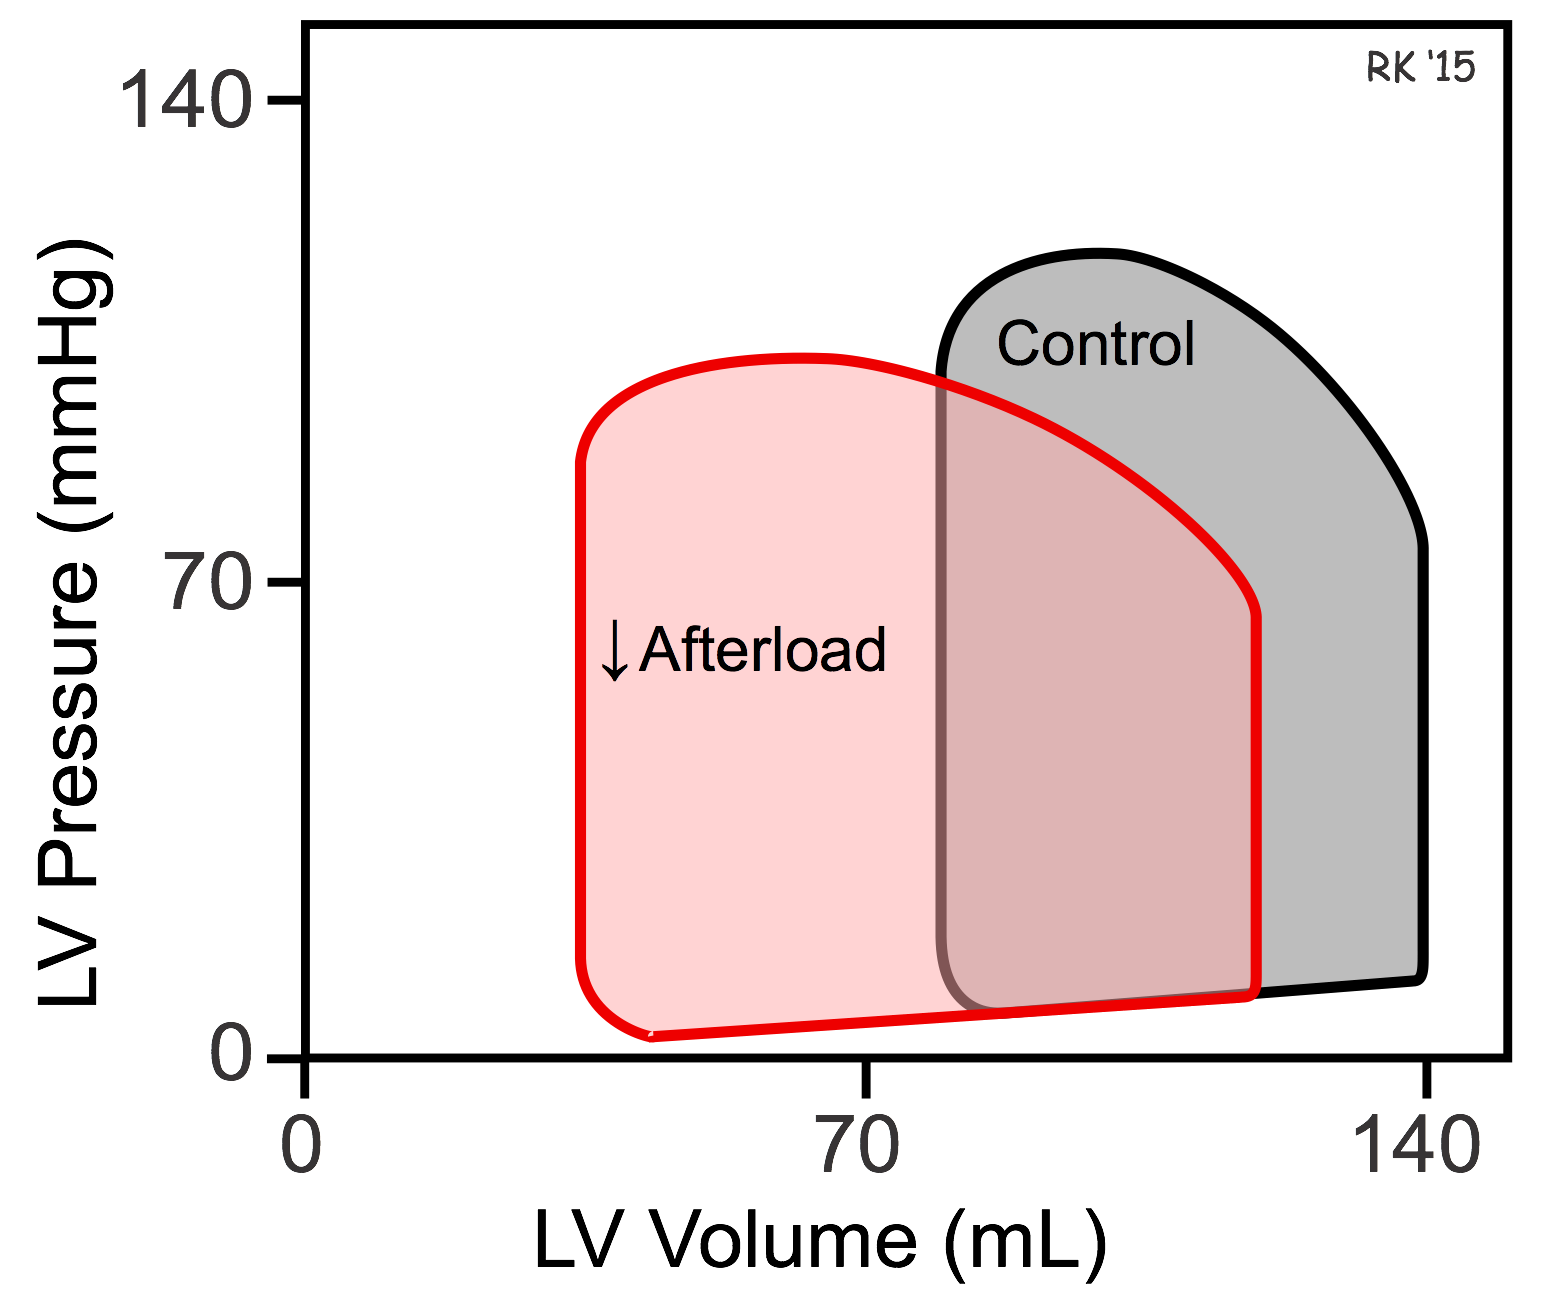 Afterload effects on ventricular pressure-volume loop